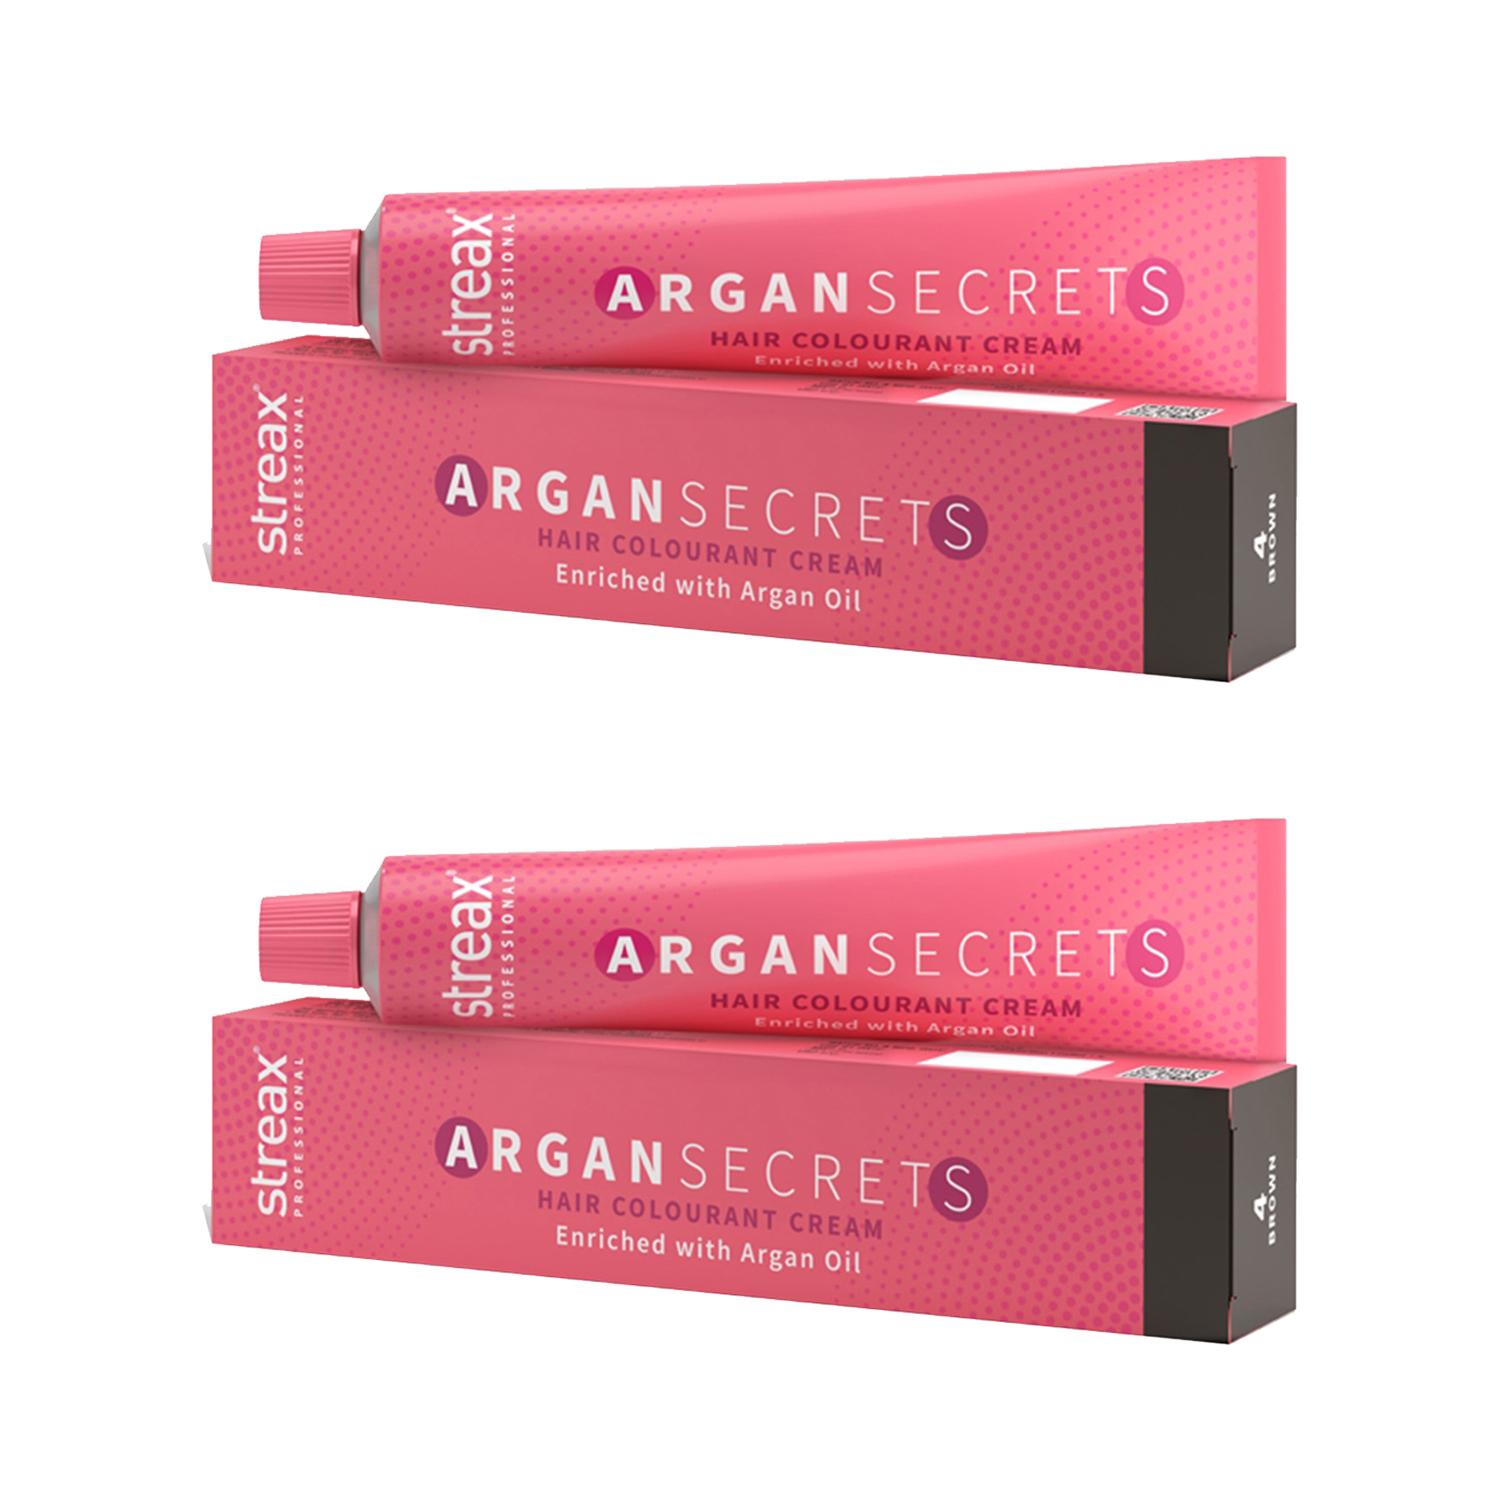 Streax Professional | Streax Professional Argan Secret Hair Colourant Cream - Brown 4 (60g) - (Pack of 2) Combo